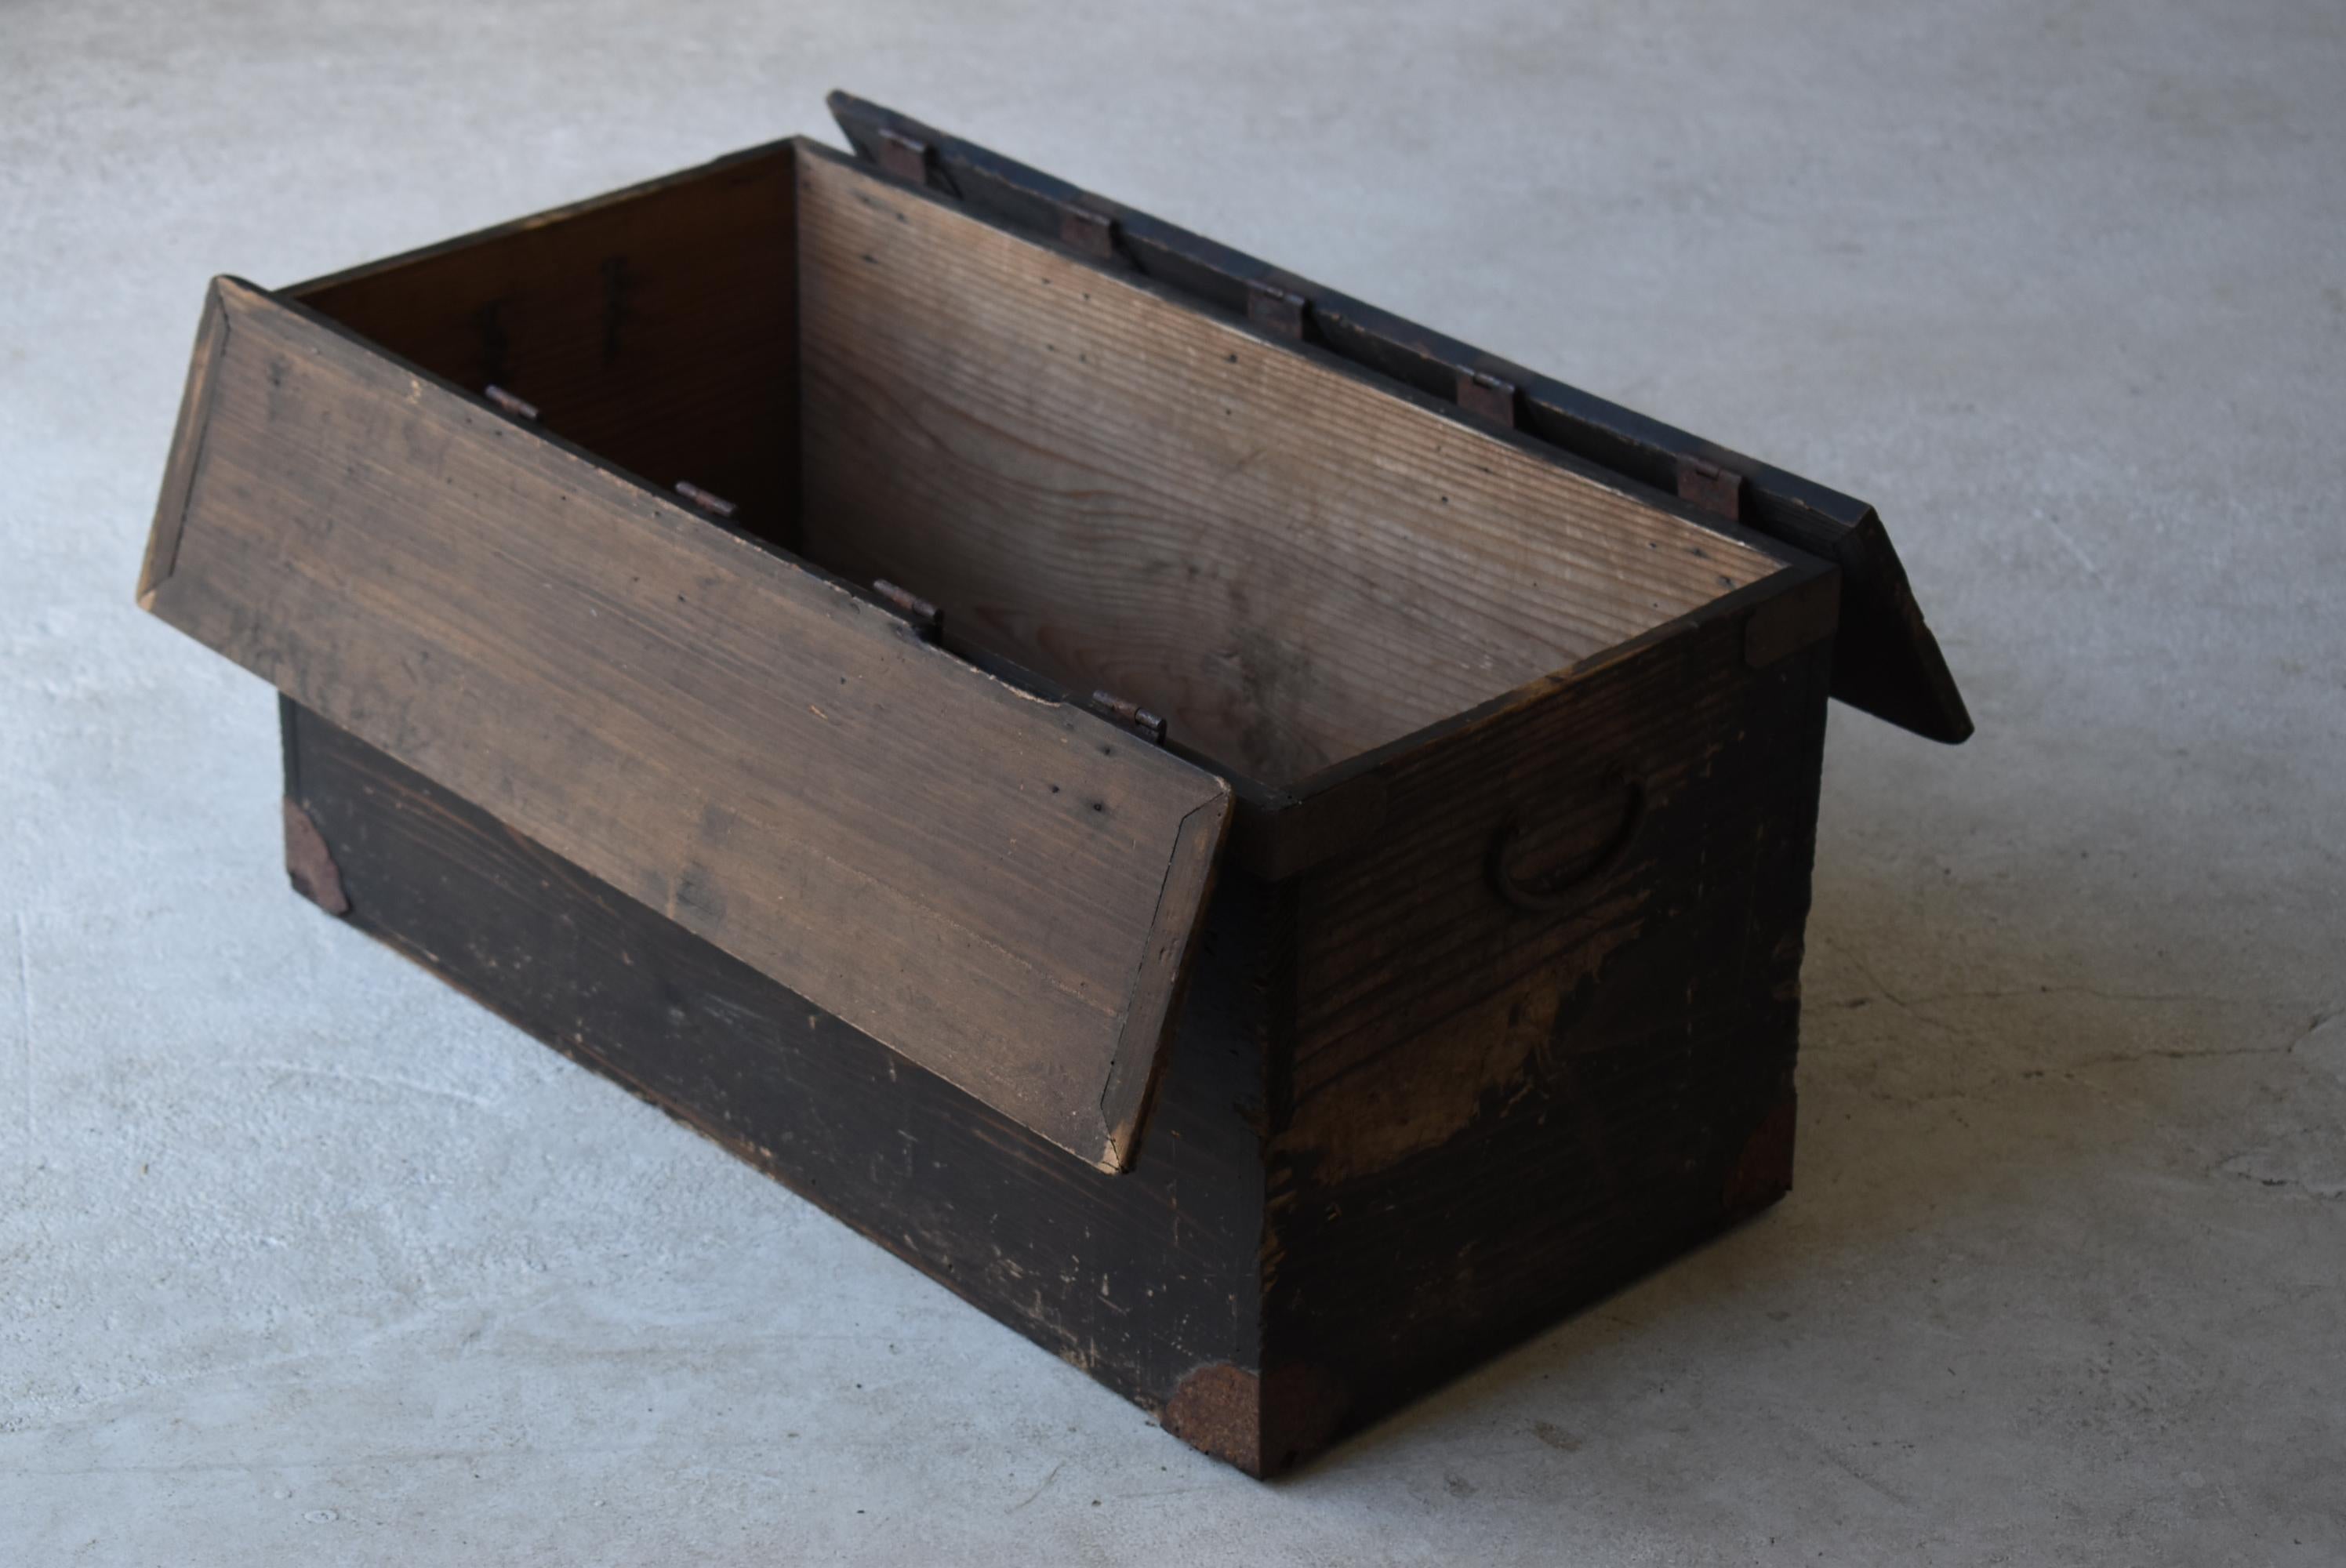 20th Century Japanese Old Wooden Box 1860s-1920s/Antique Storage Sofa Table Wabisabi Art